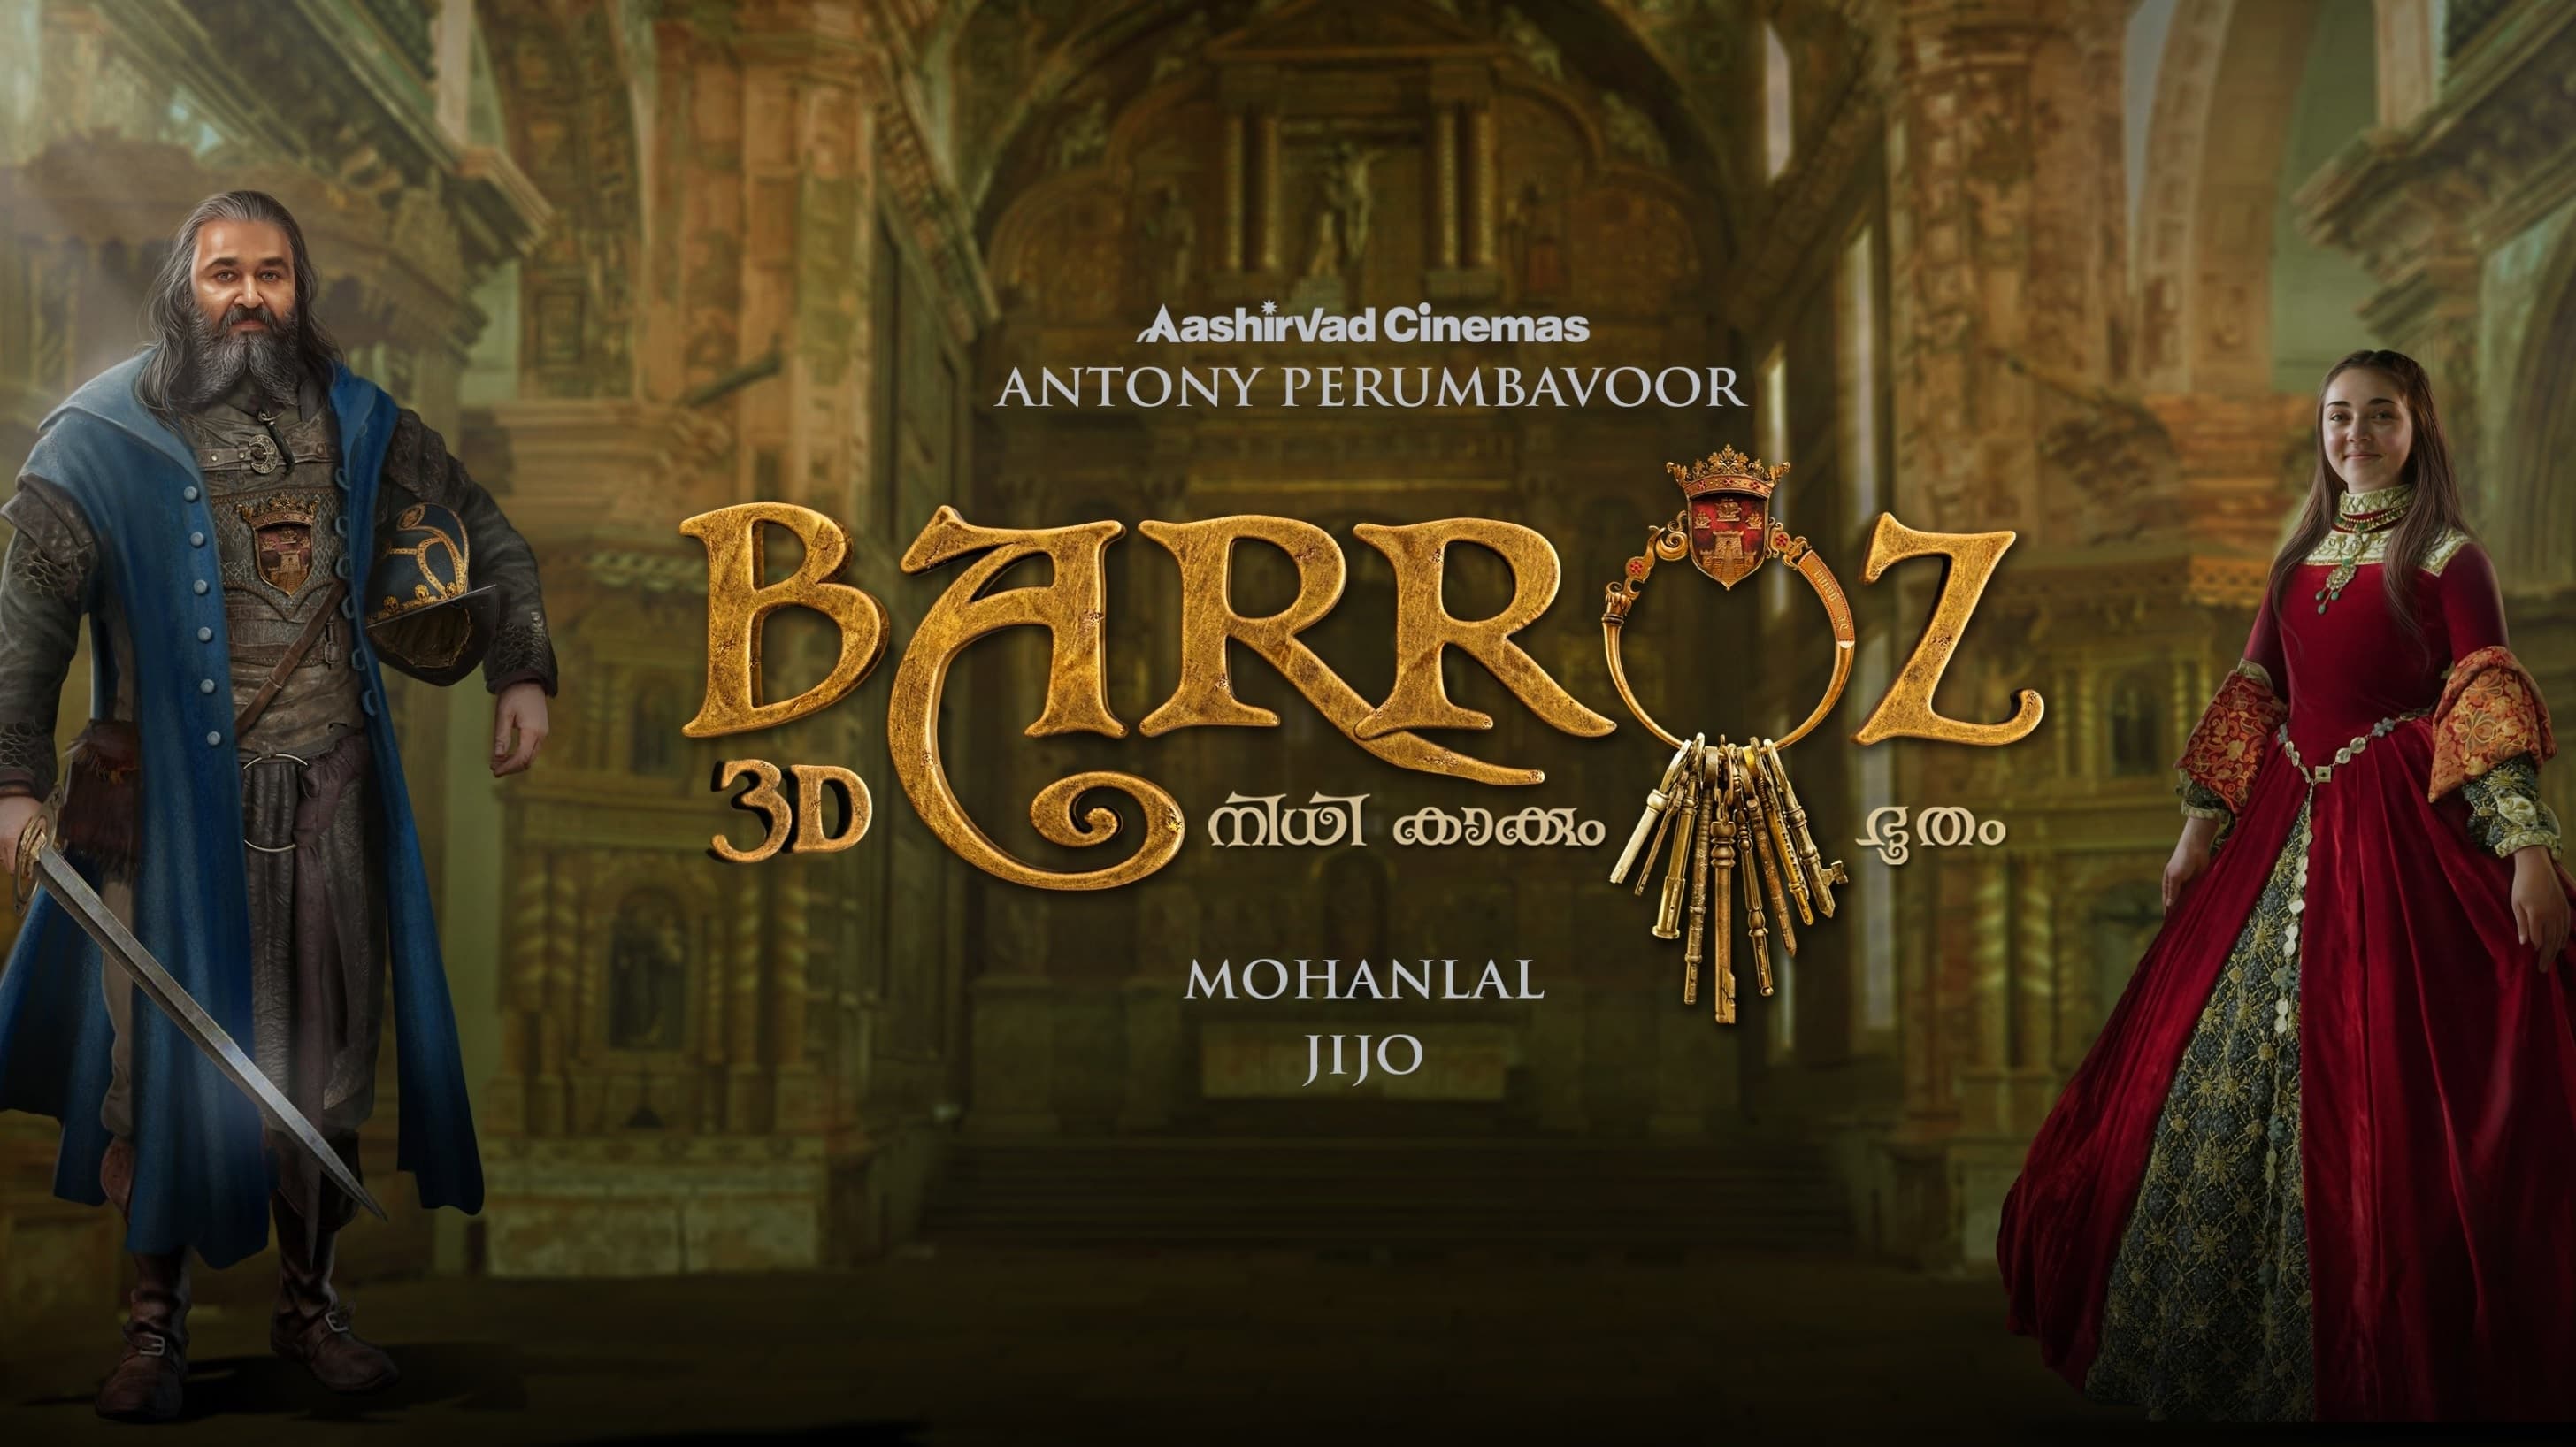 Barroz – Guardian of D'Gama's Treasure